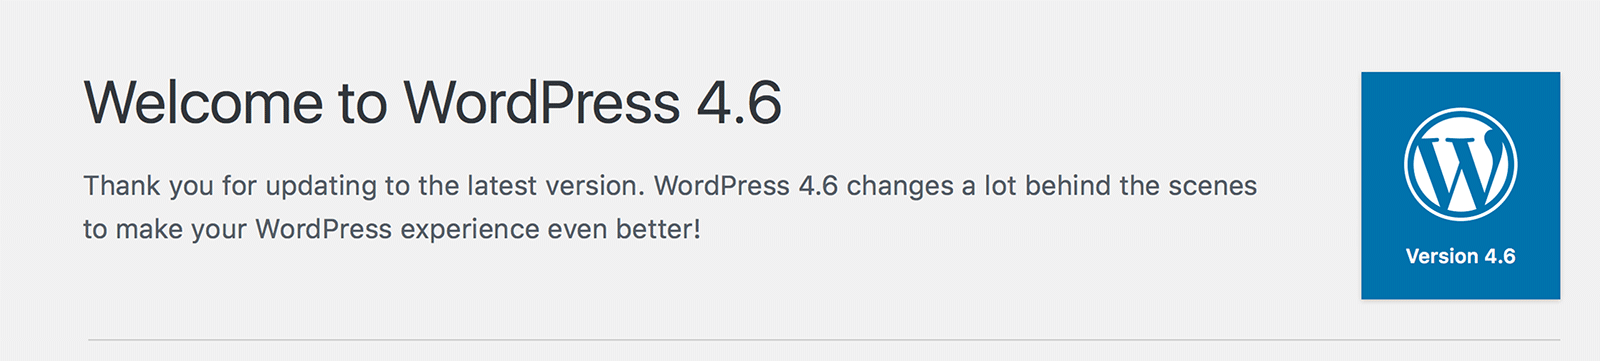 WordPress Version 4.6